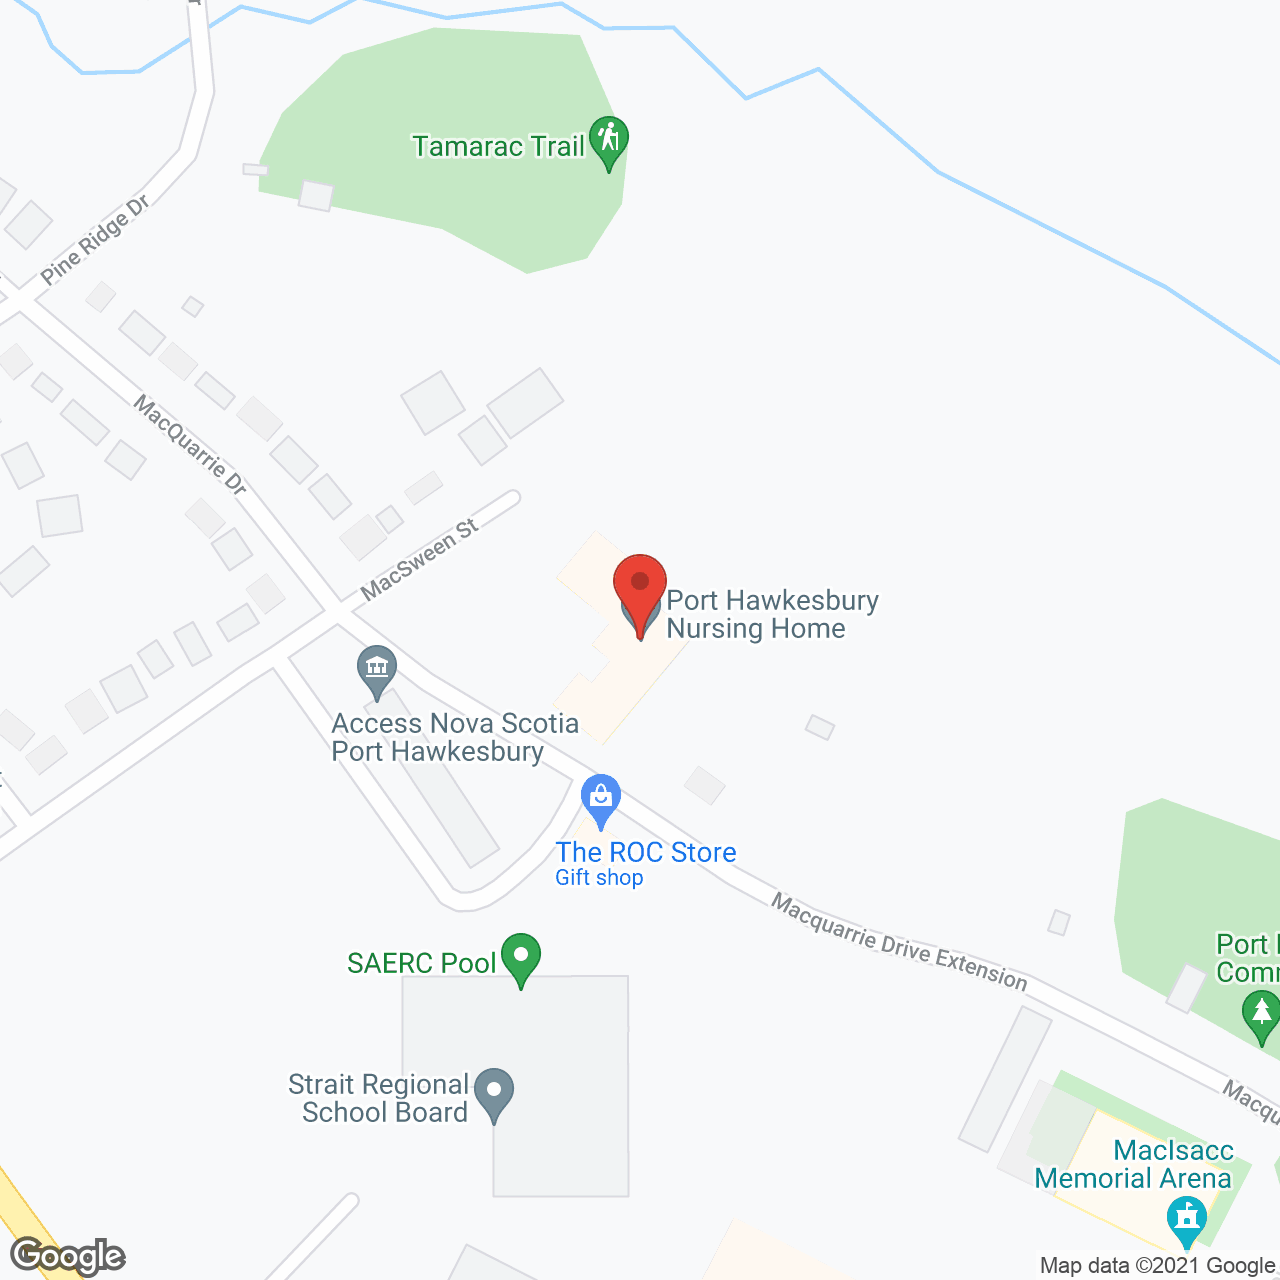 Port Hawkesbury Nursing Home in google map